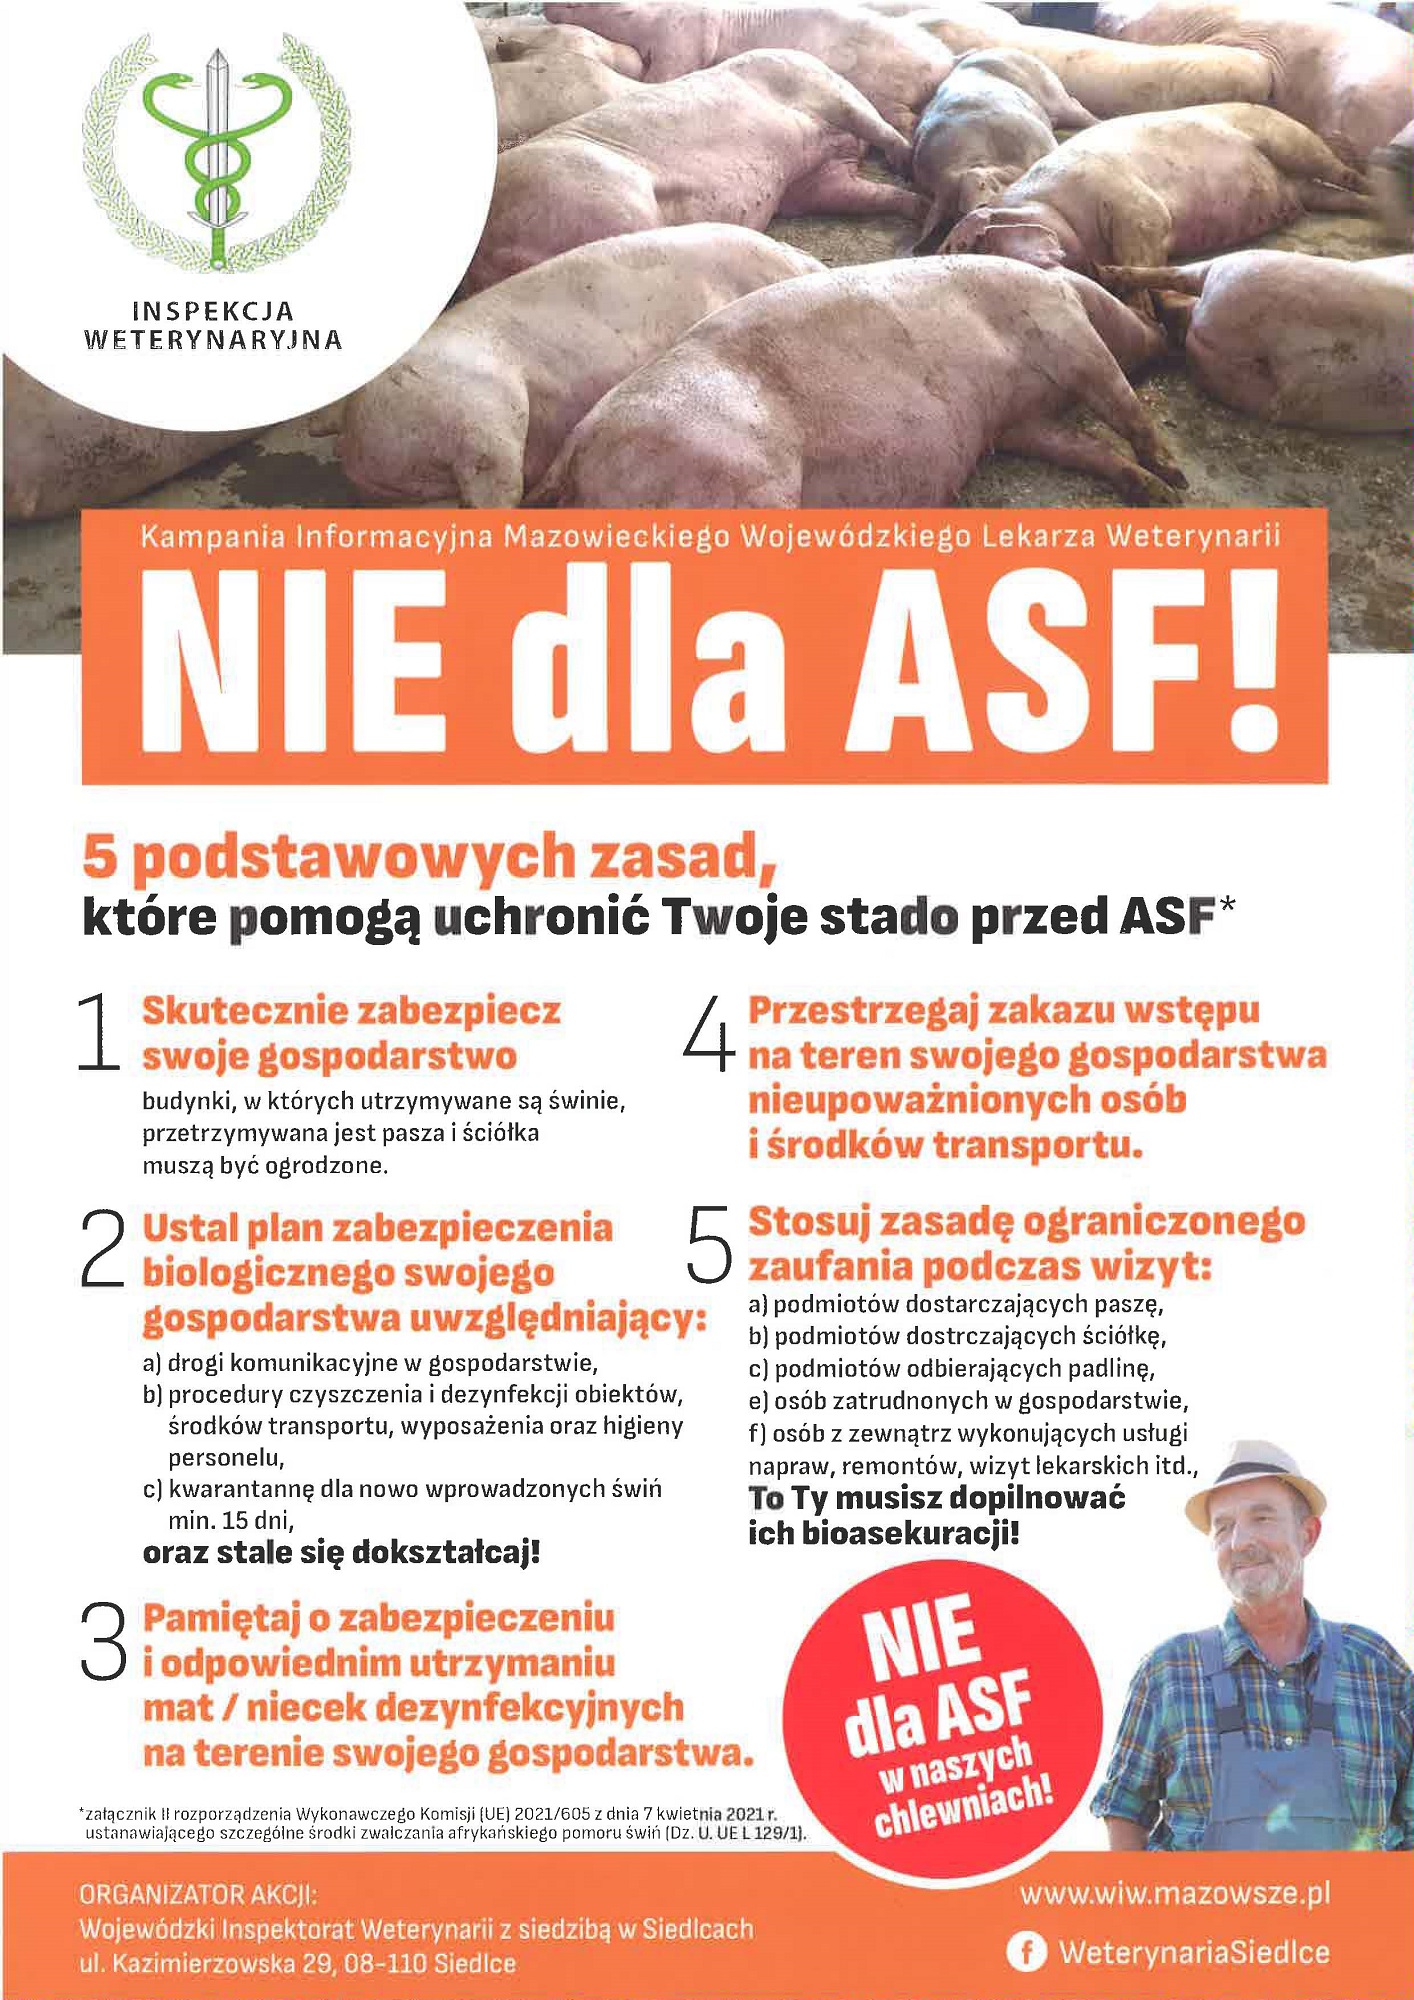 Plakat pt. "NIE dla ASF"